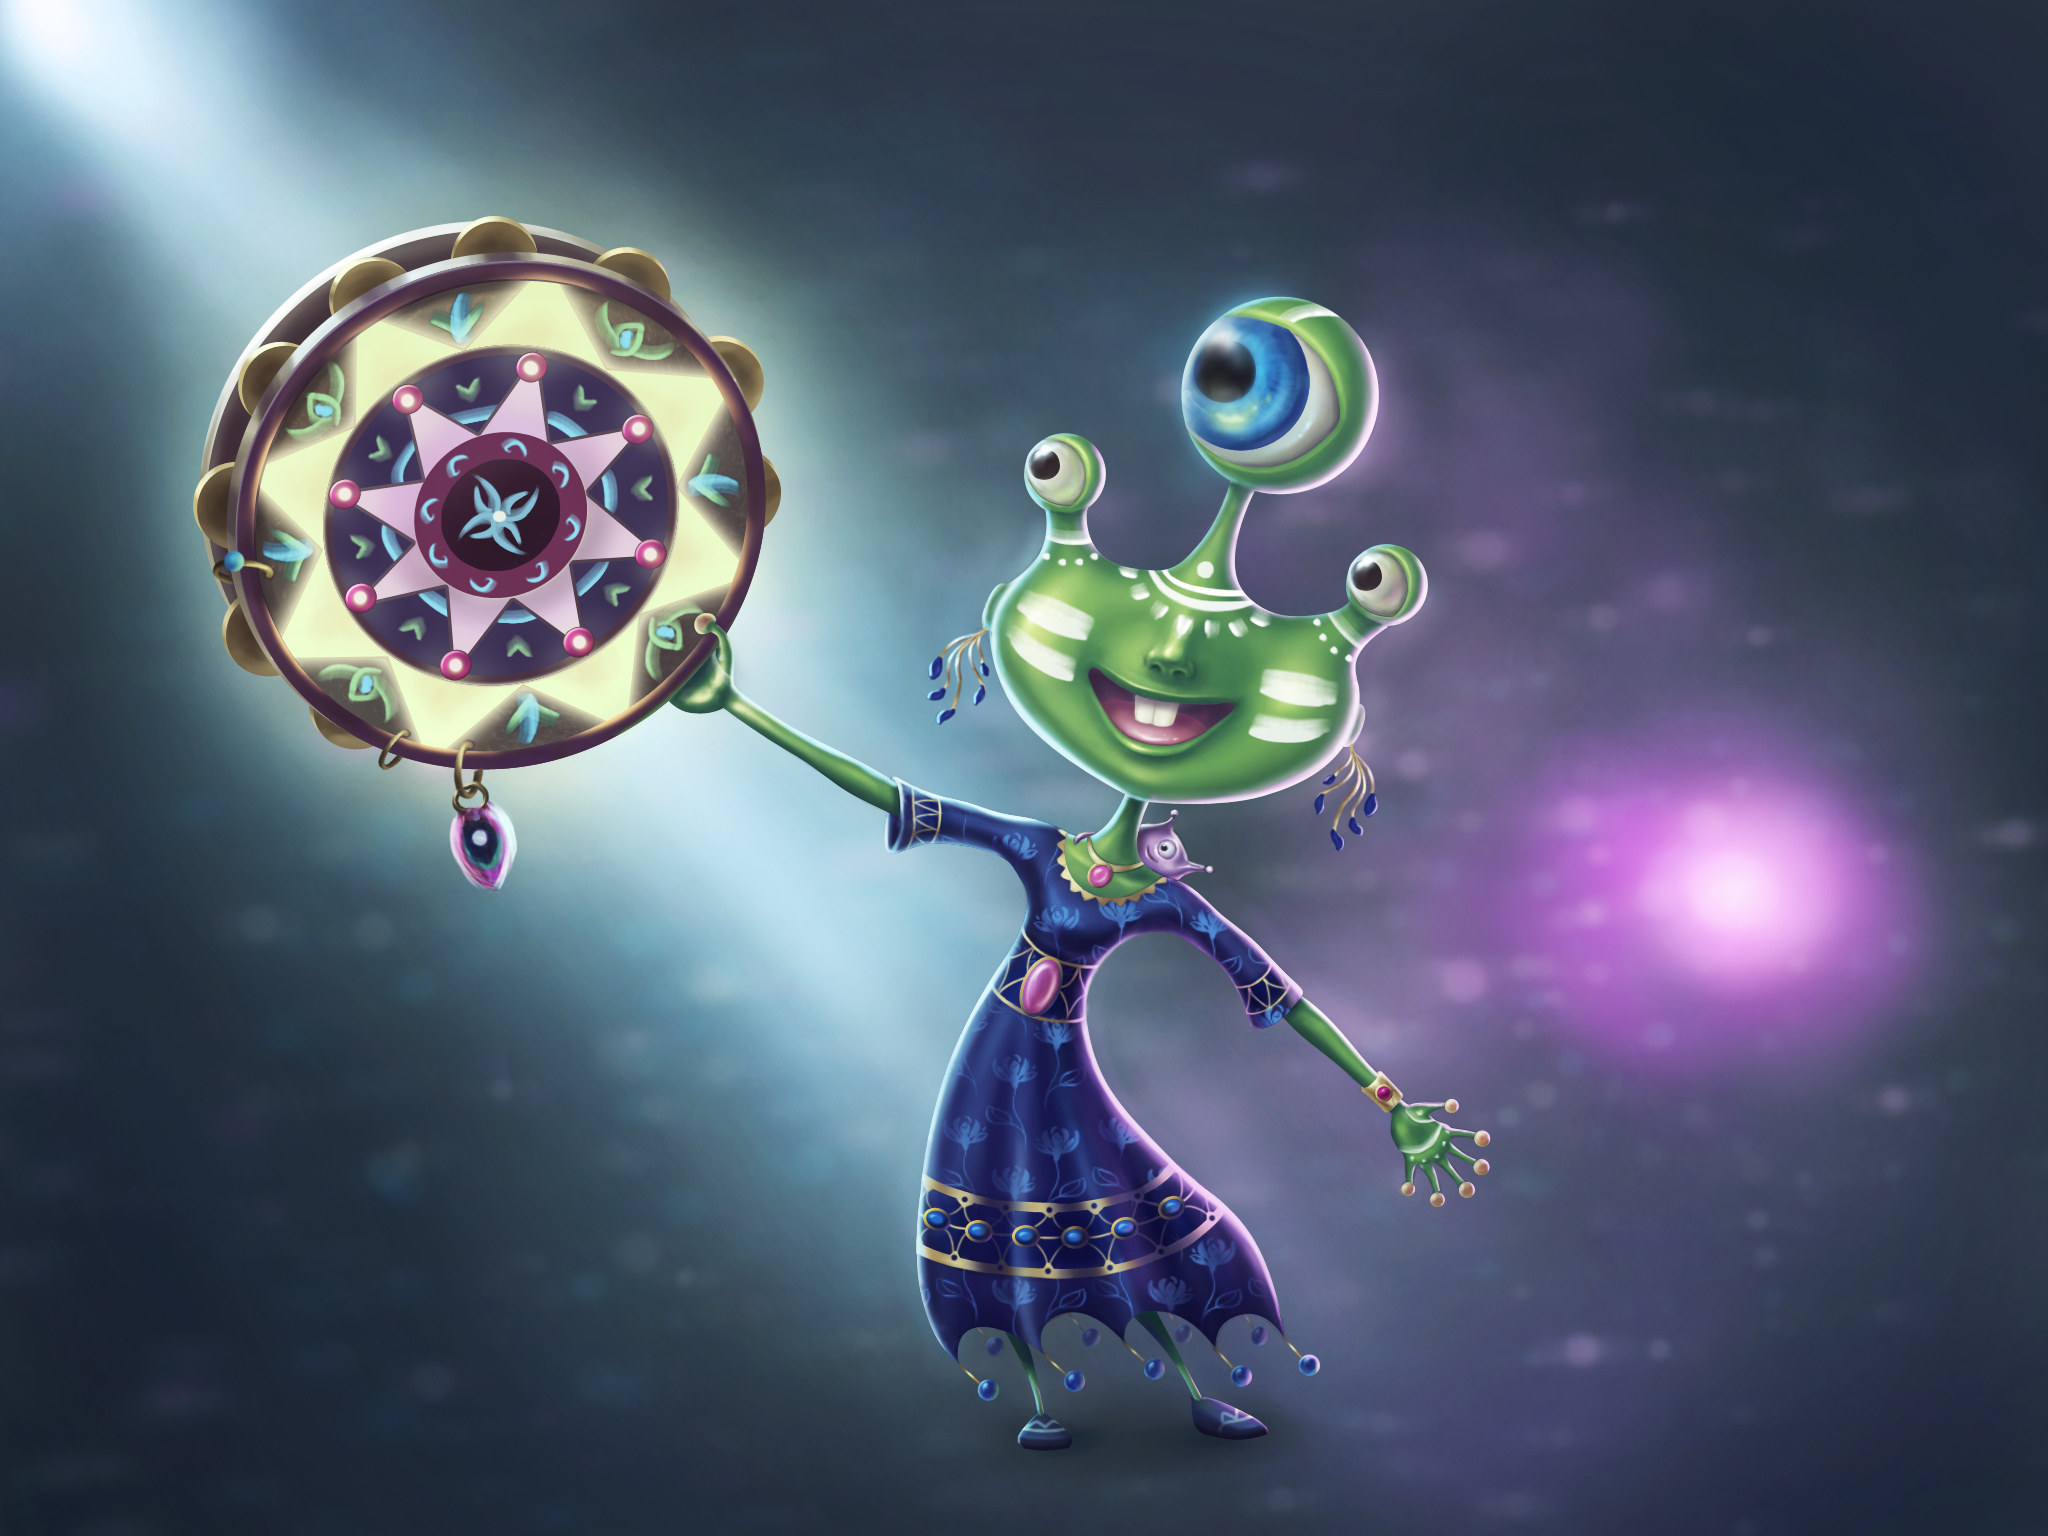 Art character design Aliens by artist Alice Croft Пришелец дизайн персонажа